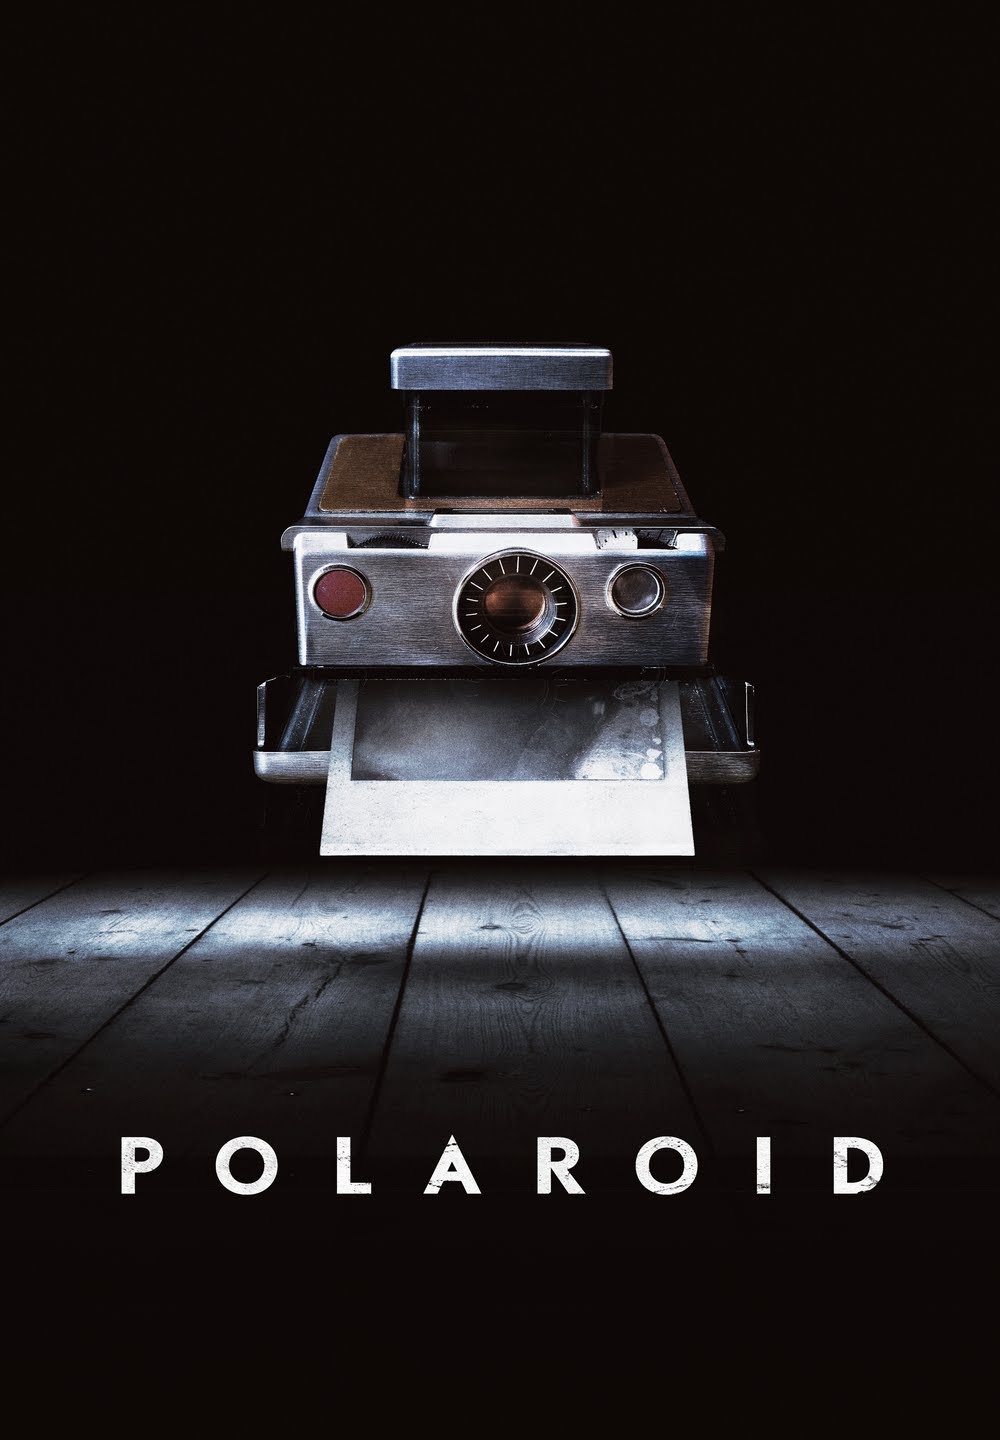 Polaroid [HD] (2019)